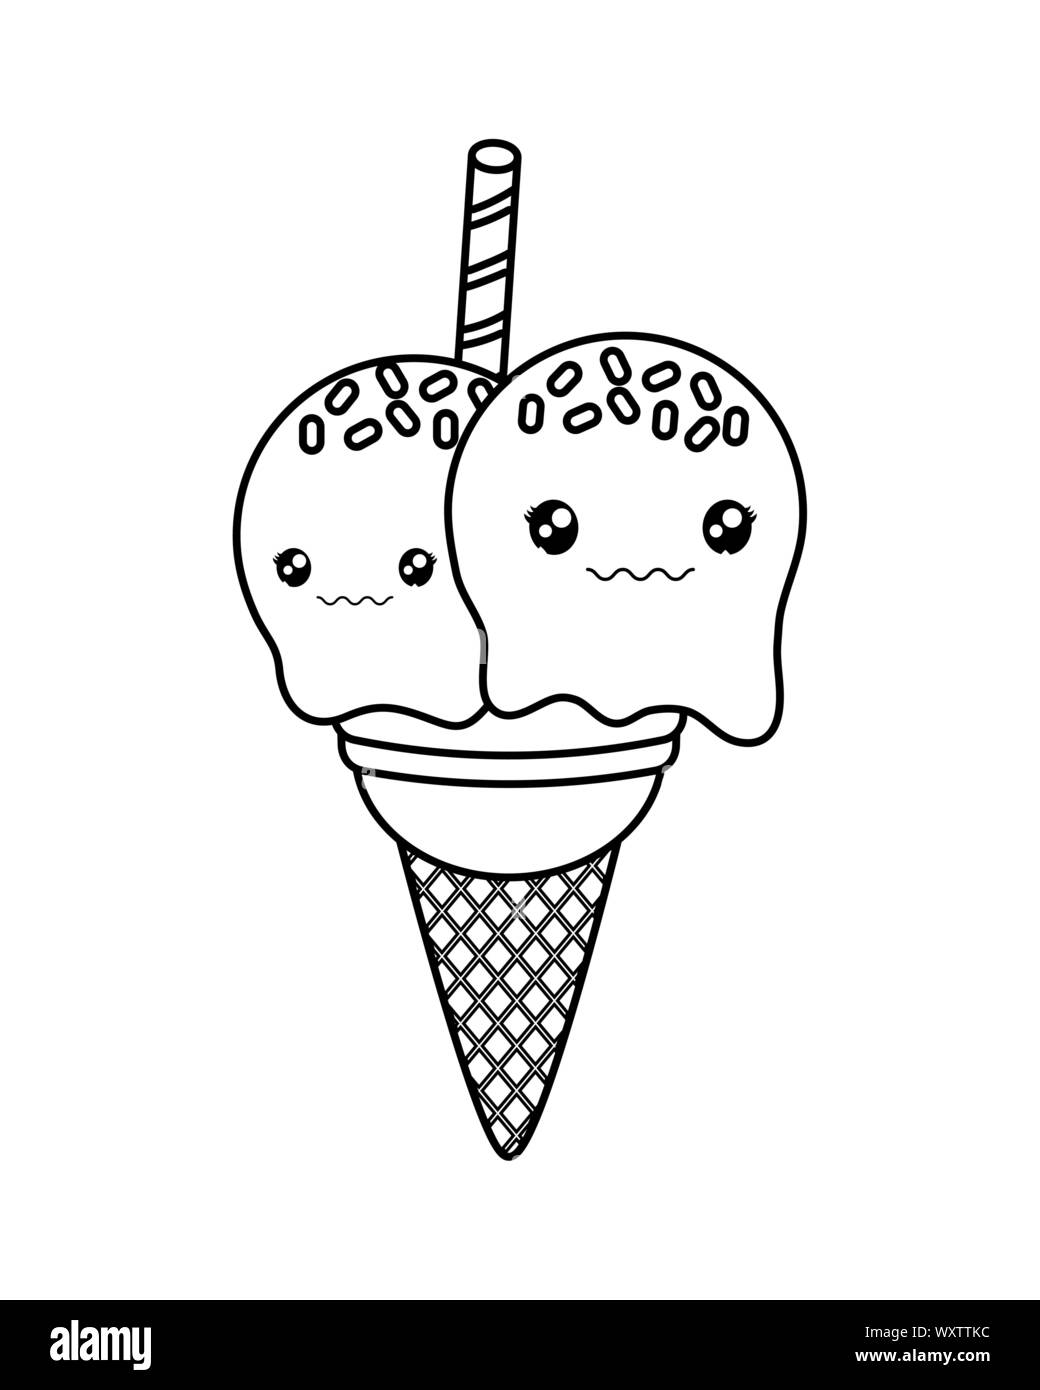 cute ice cream monochrome kawaii character vector illustration design ...